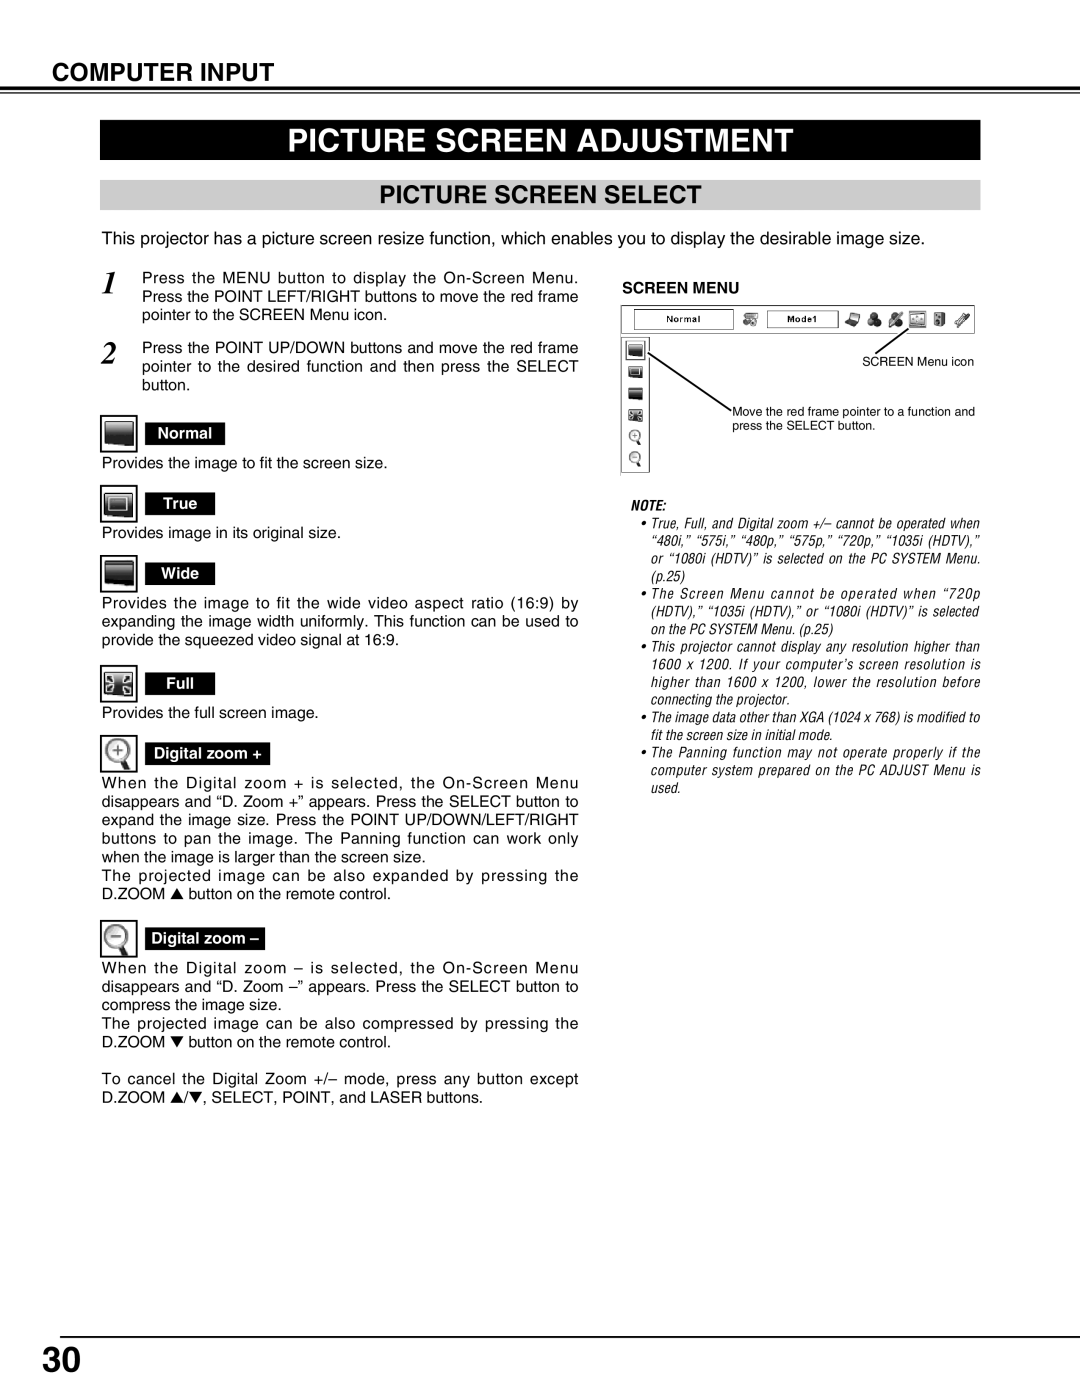 Eiki LC-X71L owner manual Picture Screen Adjustment, Screen Menu 